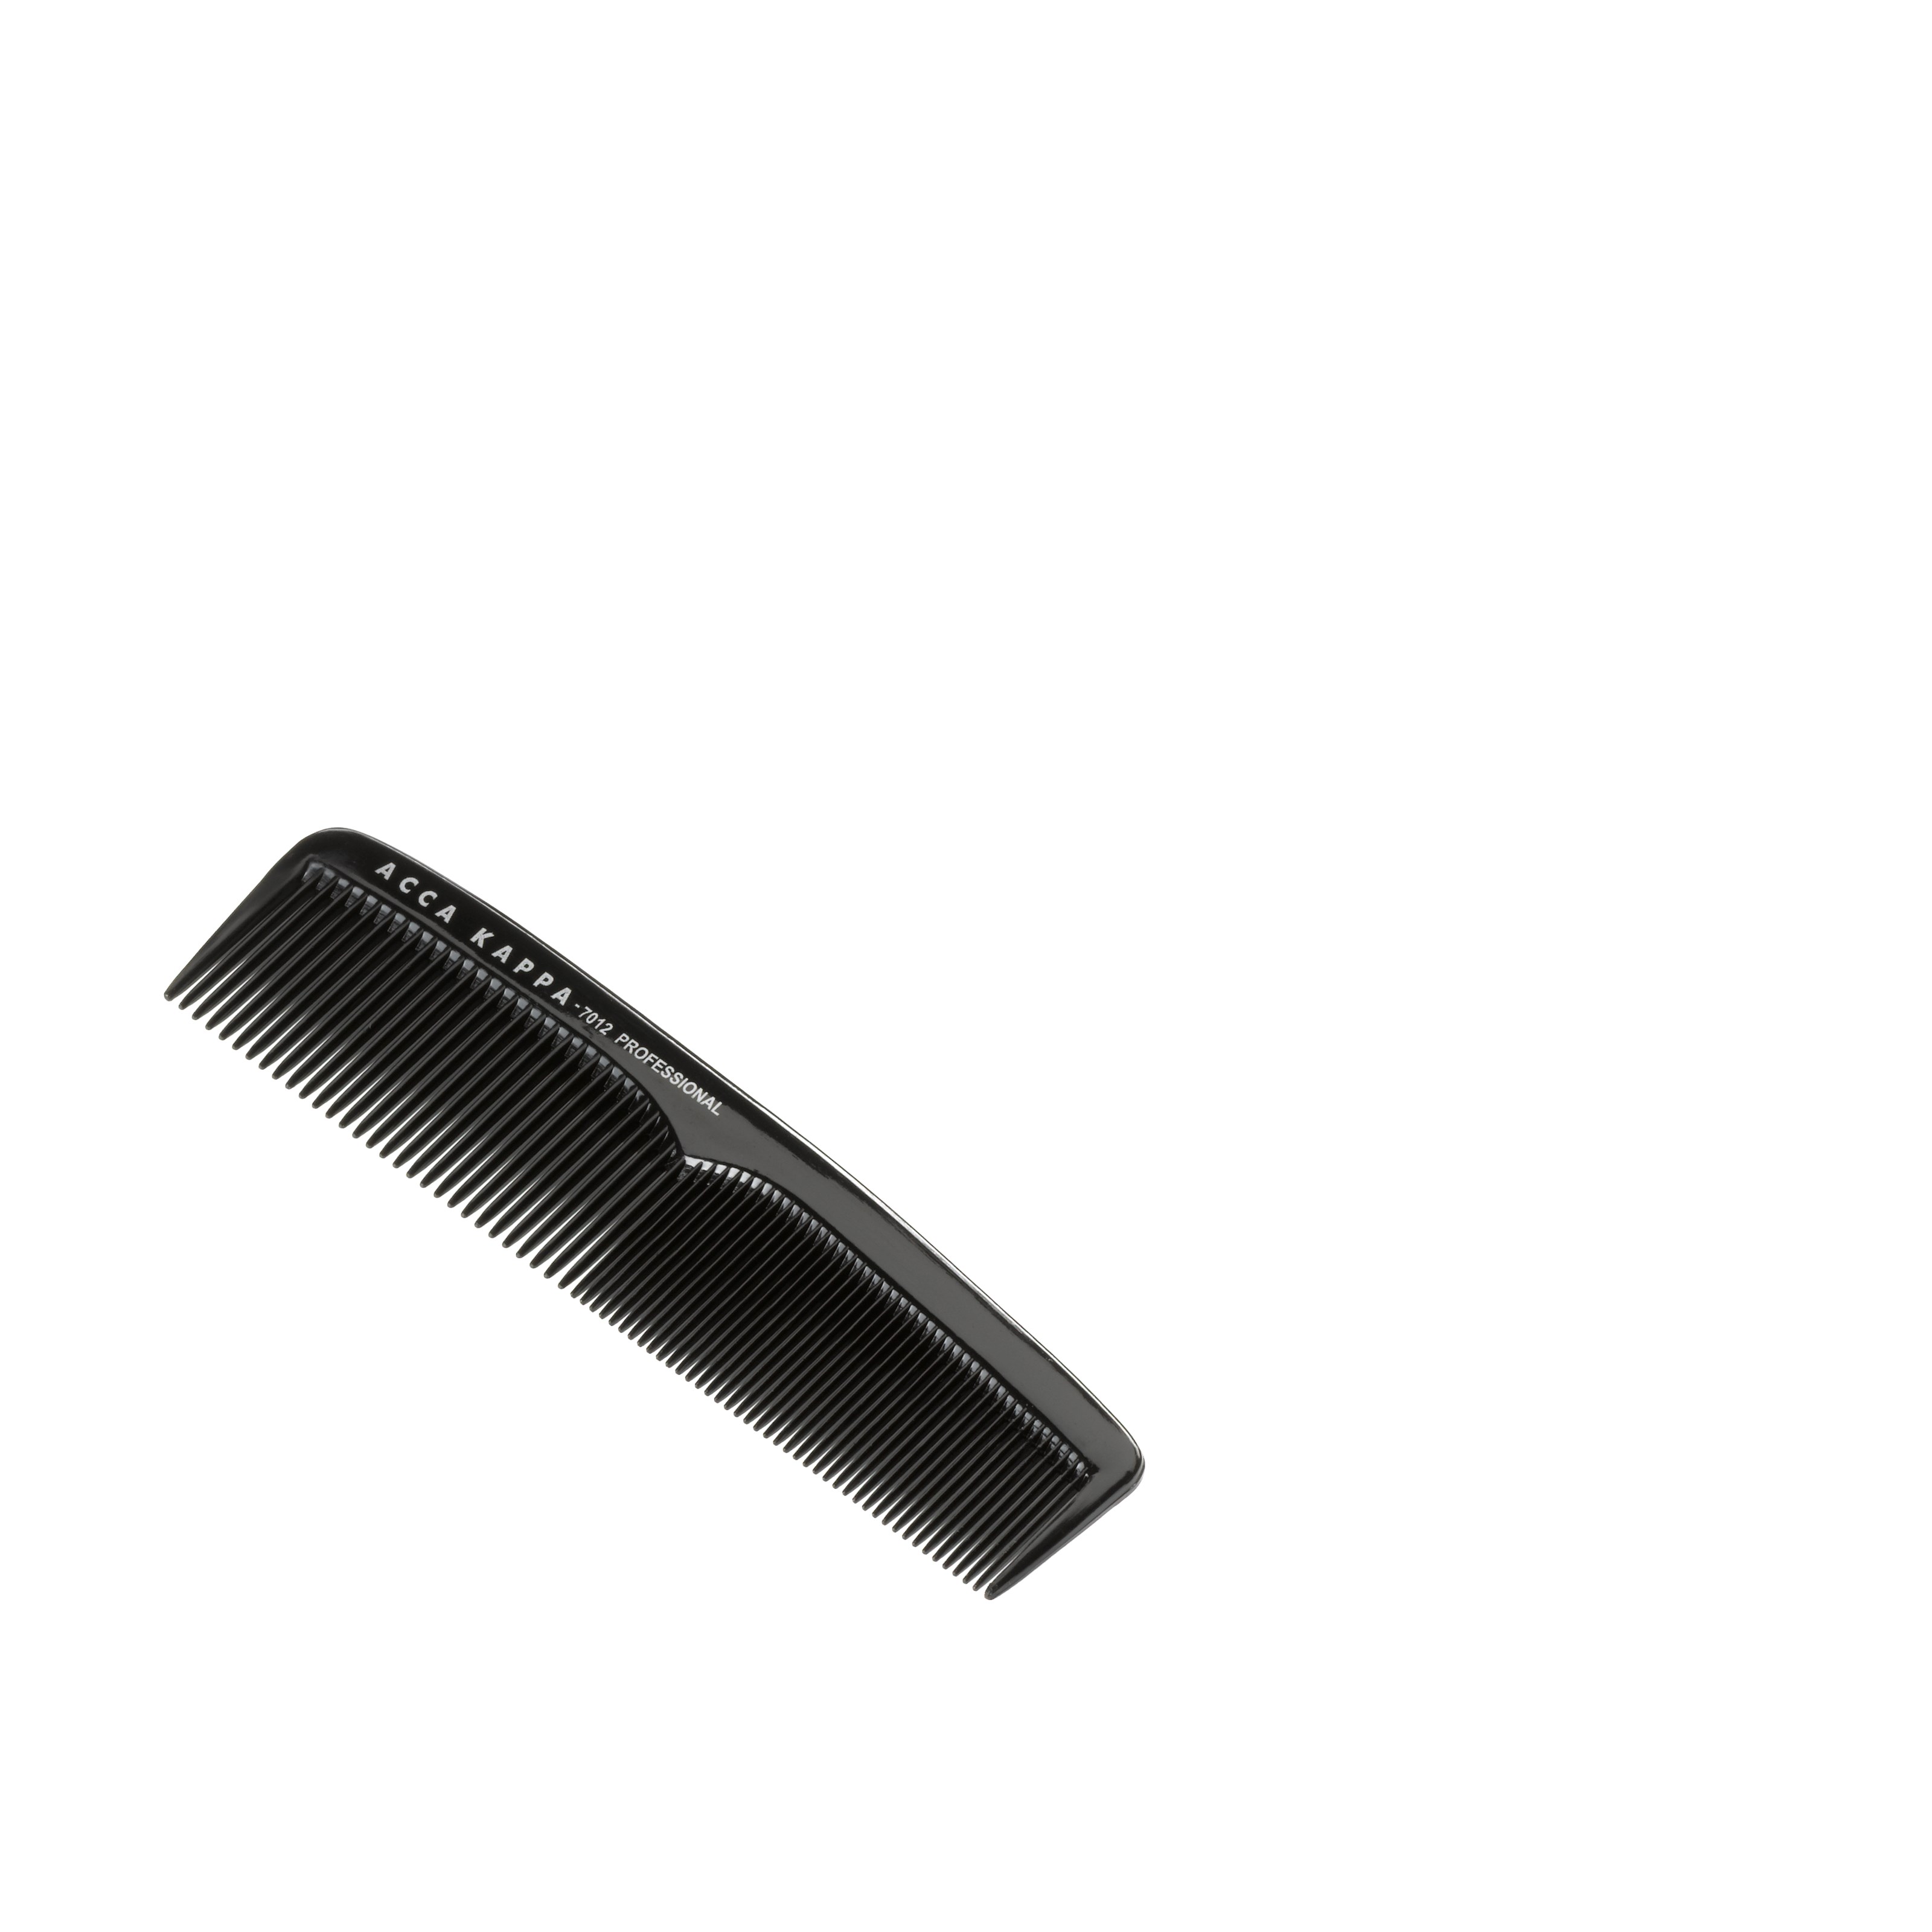 Bilde av Acca Kappa Professional Fine Coarse Pocket Comb With Pouch – 7012 Blac